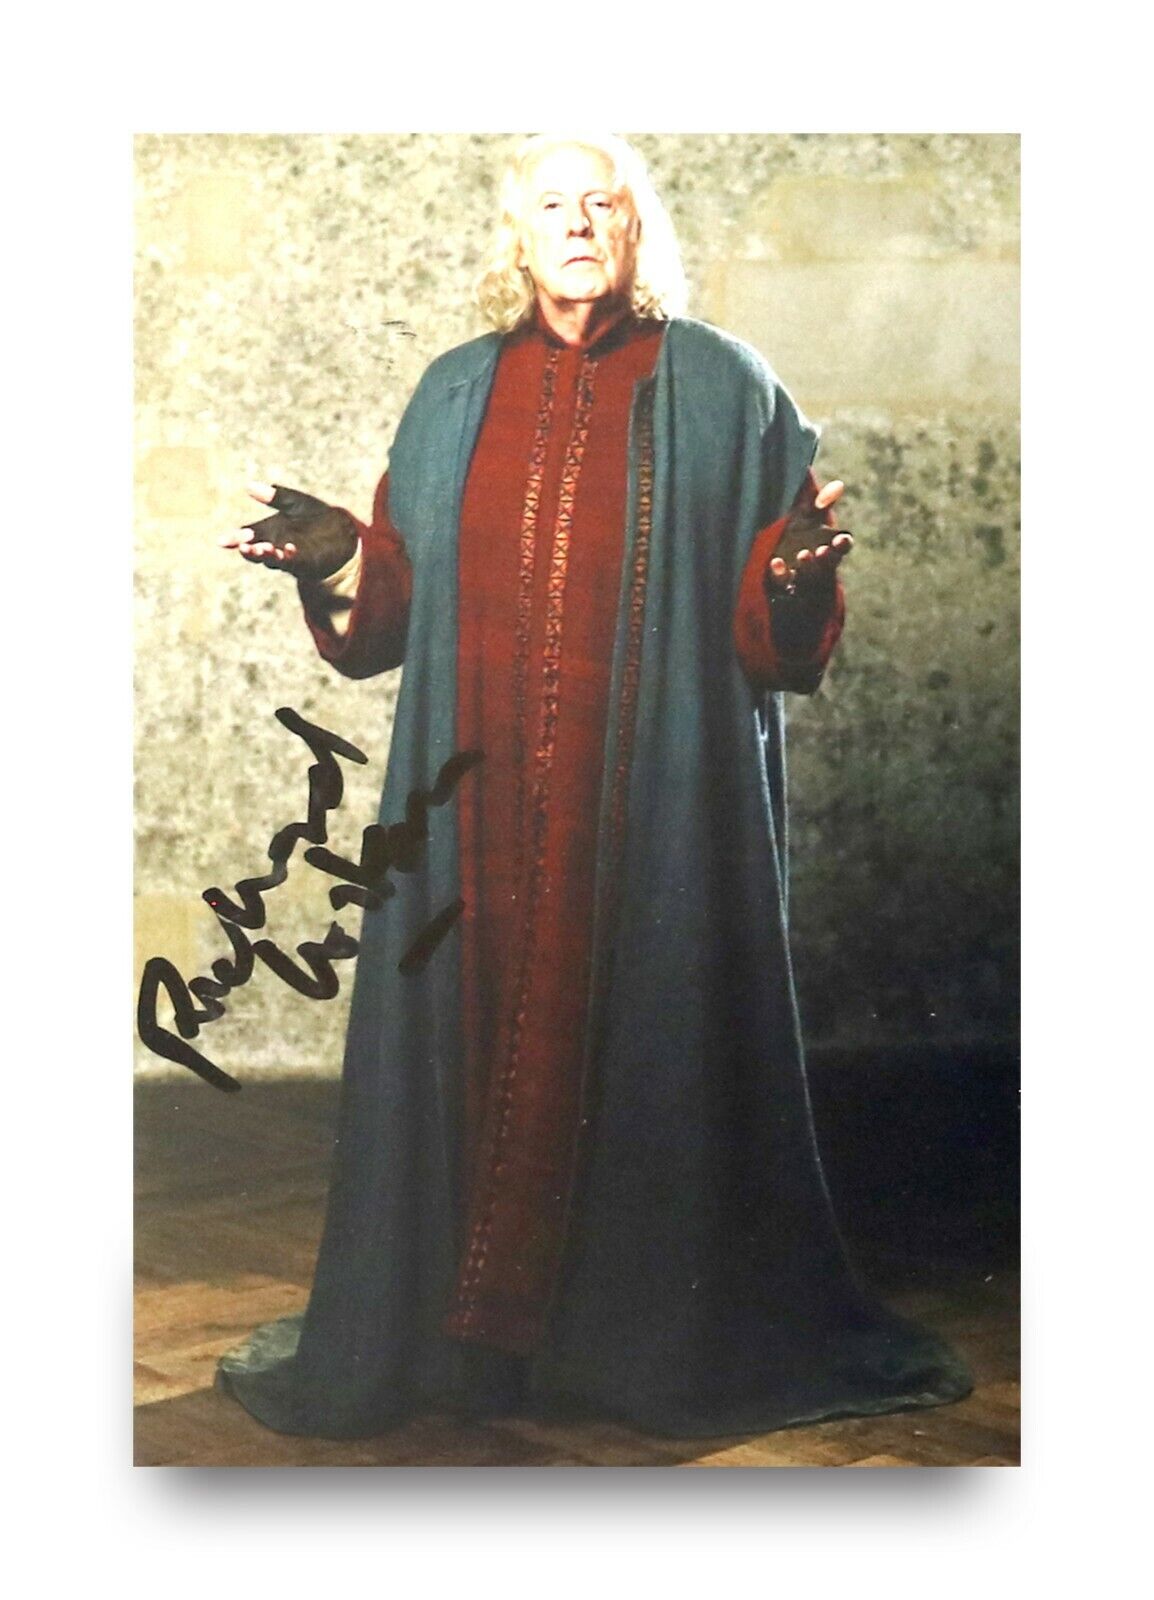 Richard Wilson Hand Signed 6x4 Photo Poster painting Gaius Merlin Victor Meldrew Autograph + COA